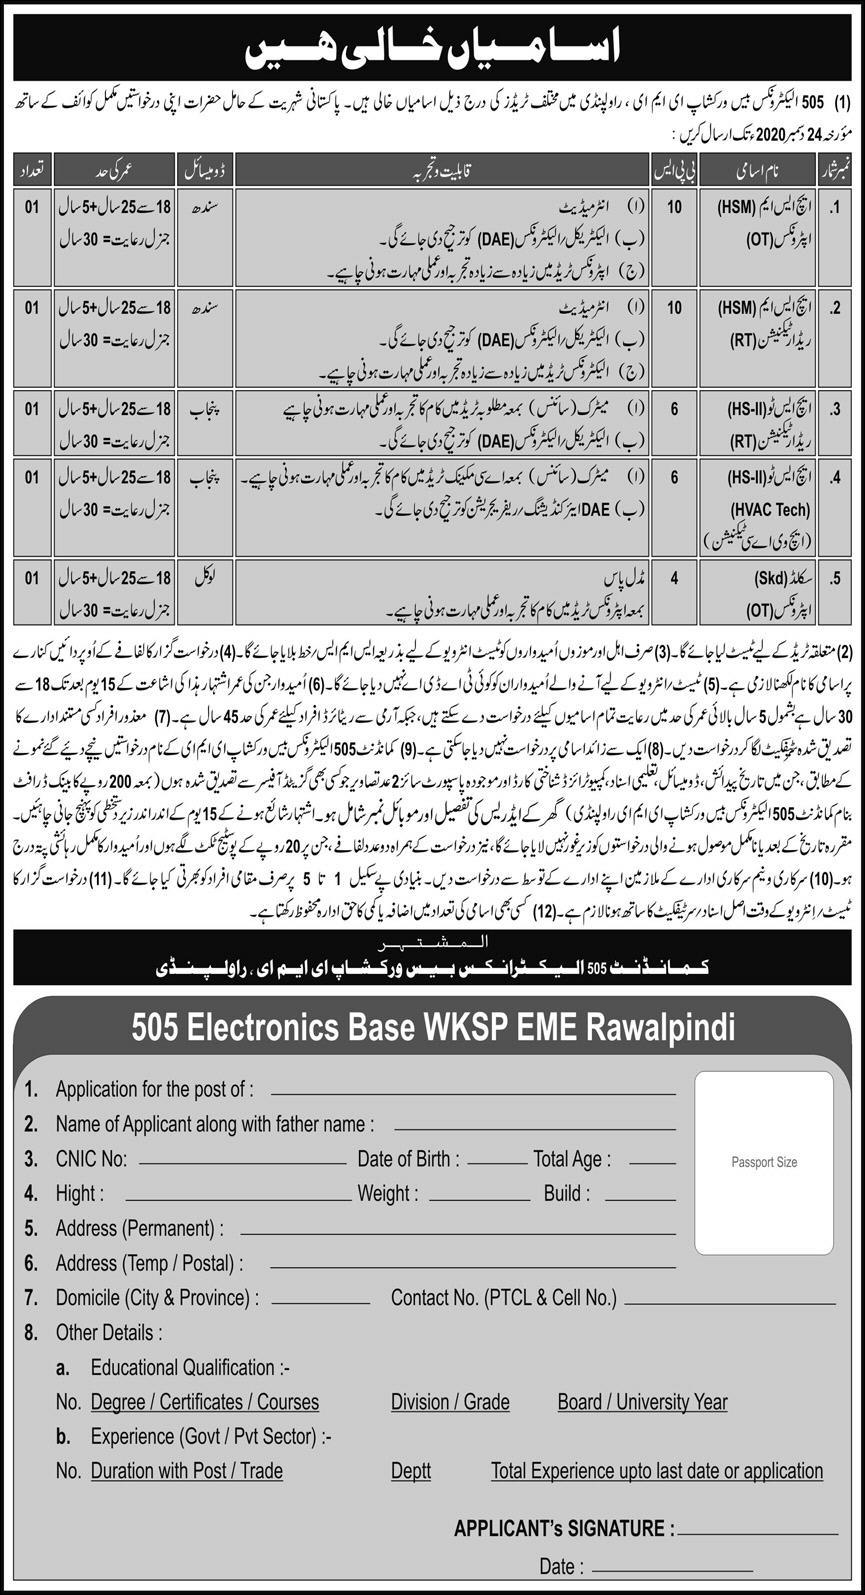 505 Electronic Base Workshop EME Rawalpindi Jobs 2020-2